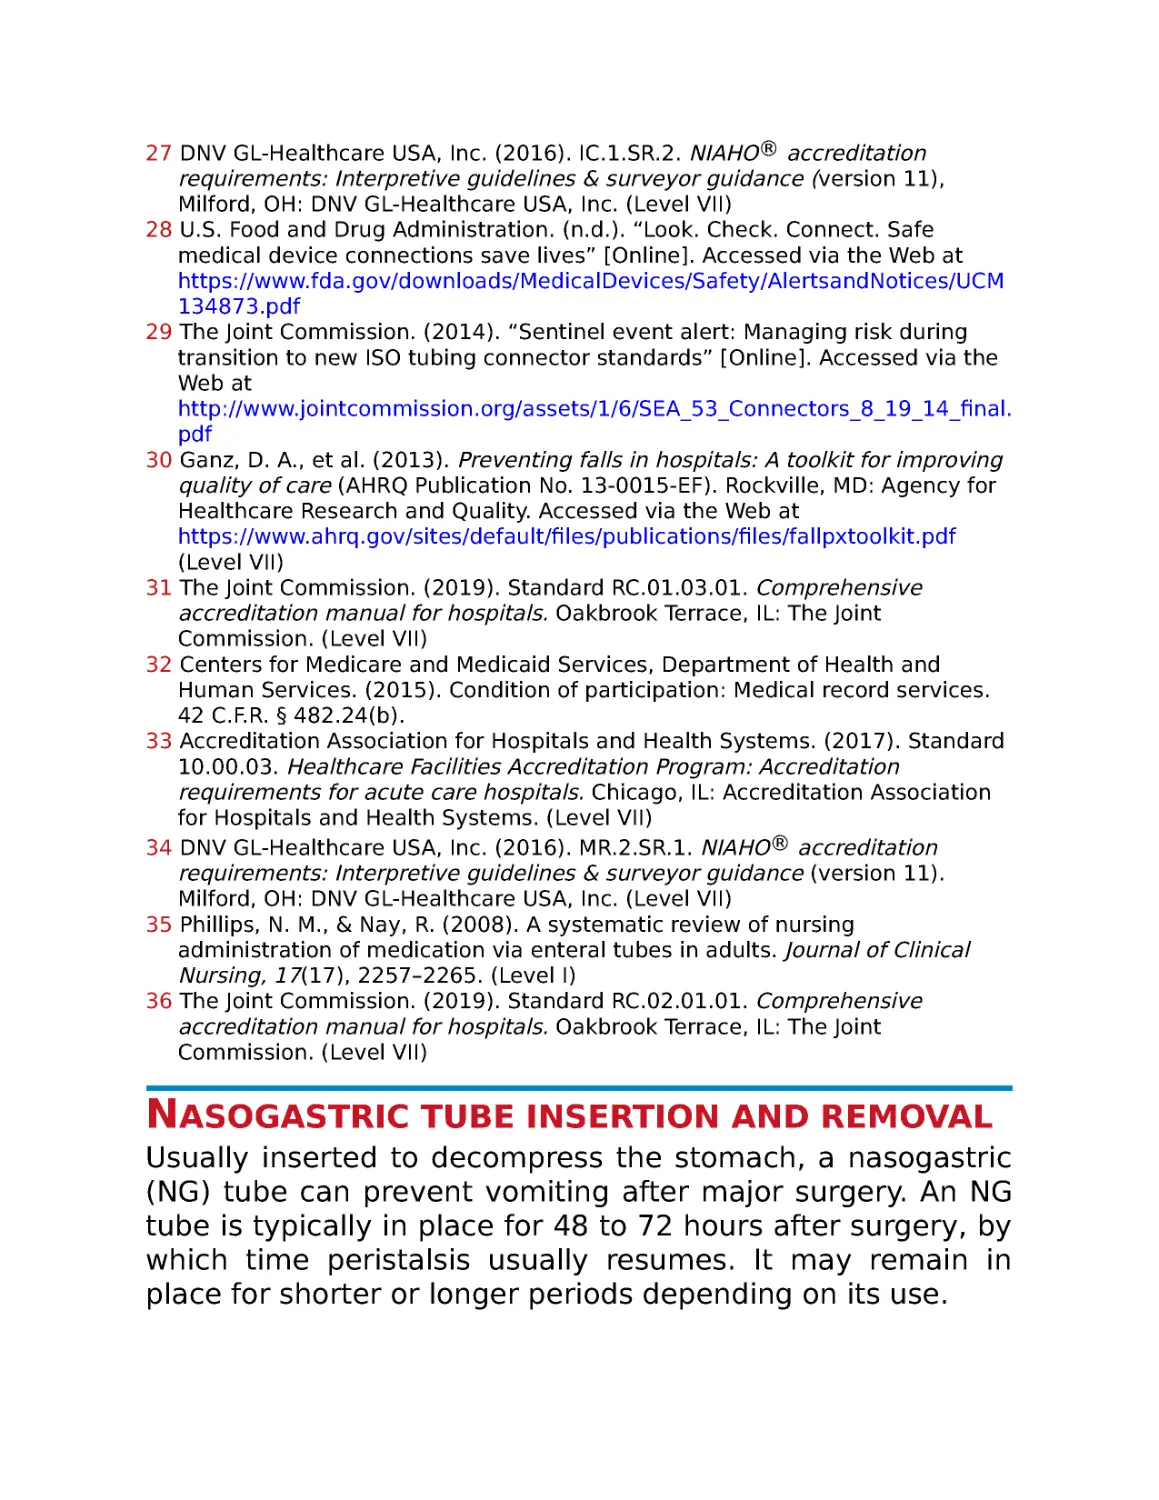 Nasogastric tube insertion and removal